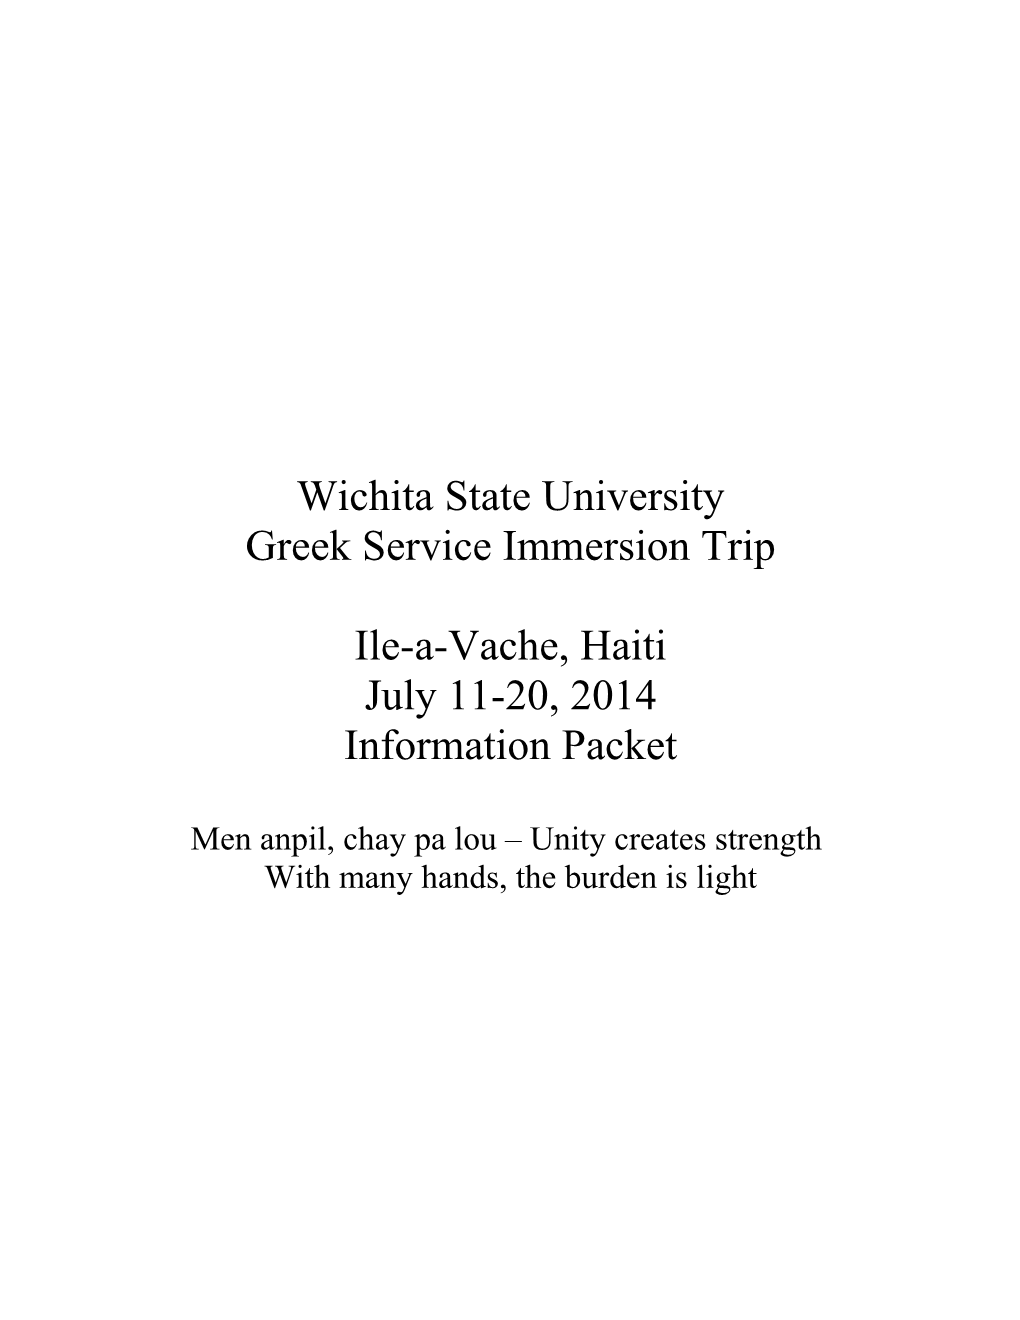 Wichita State University Greek Service Immersion Trip